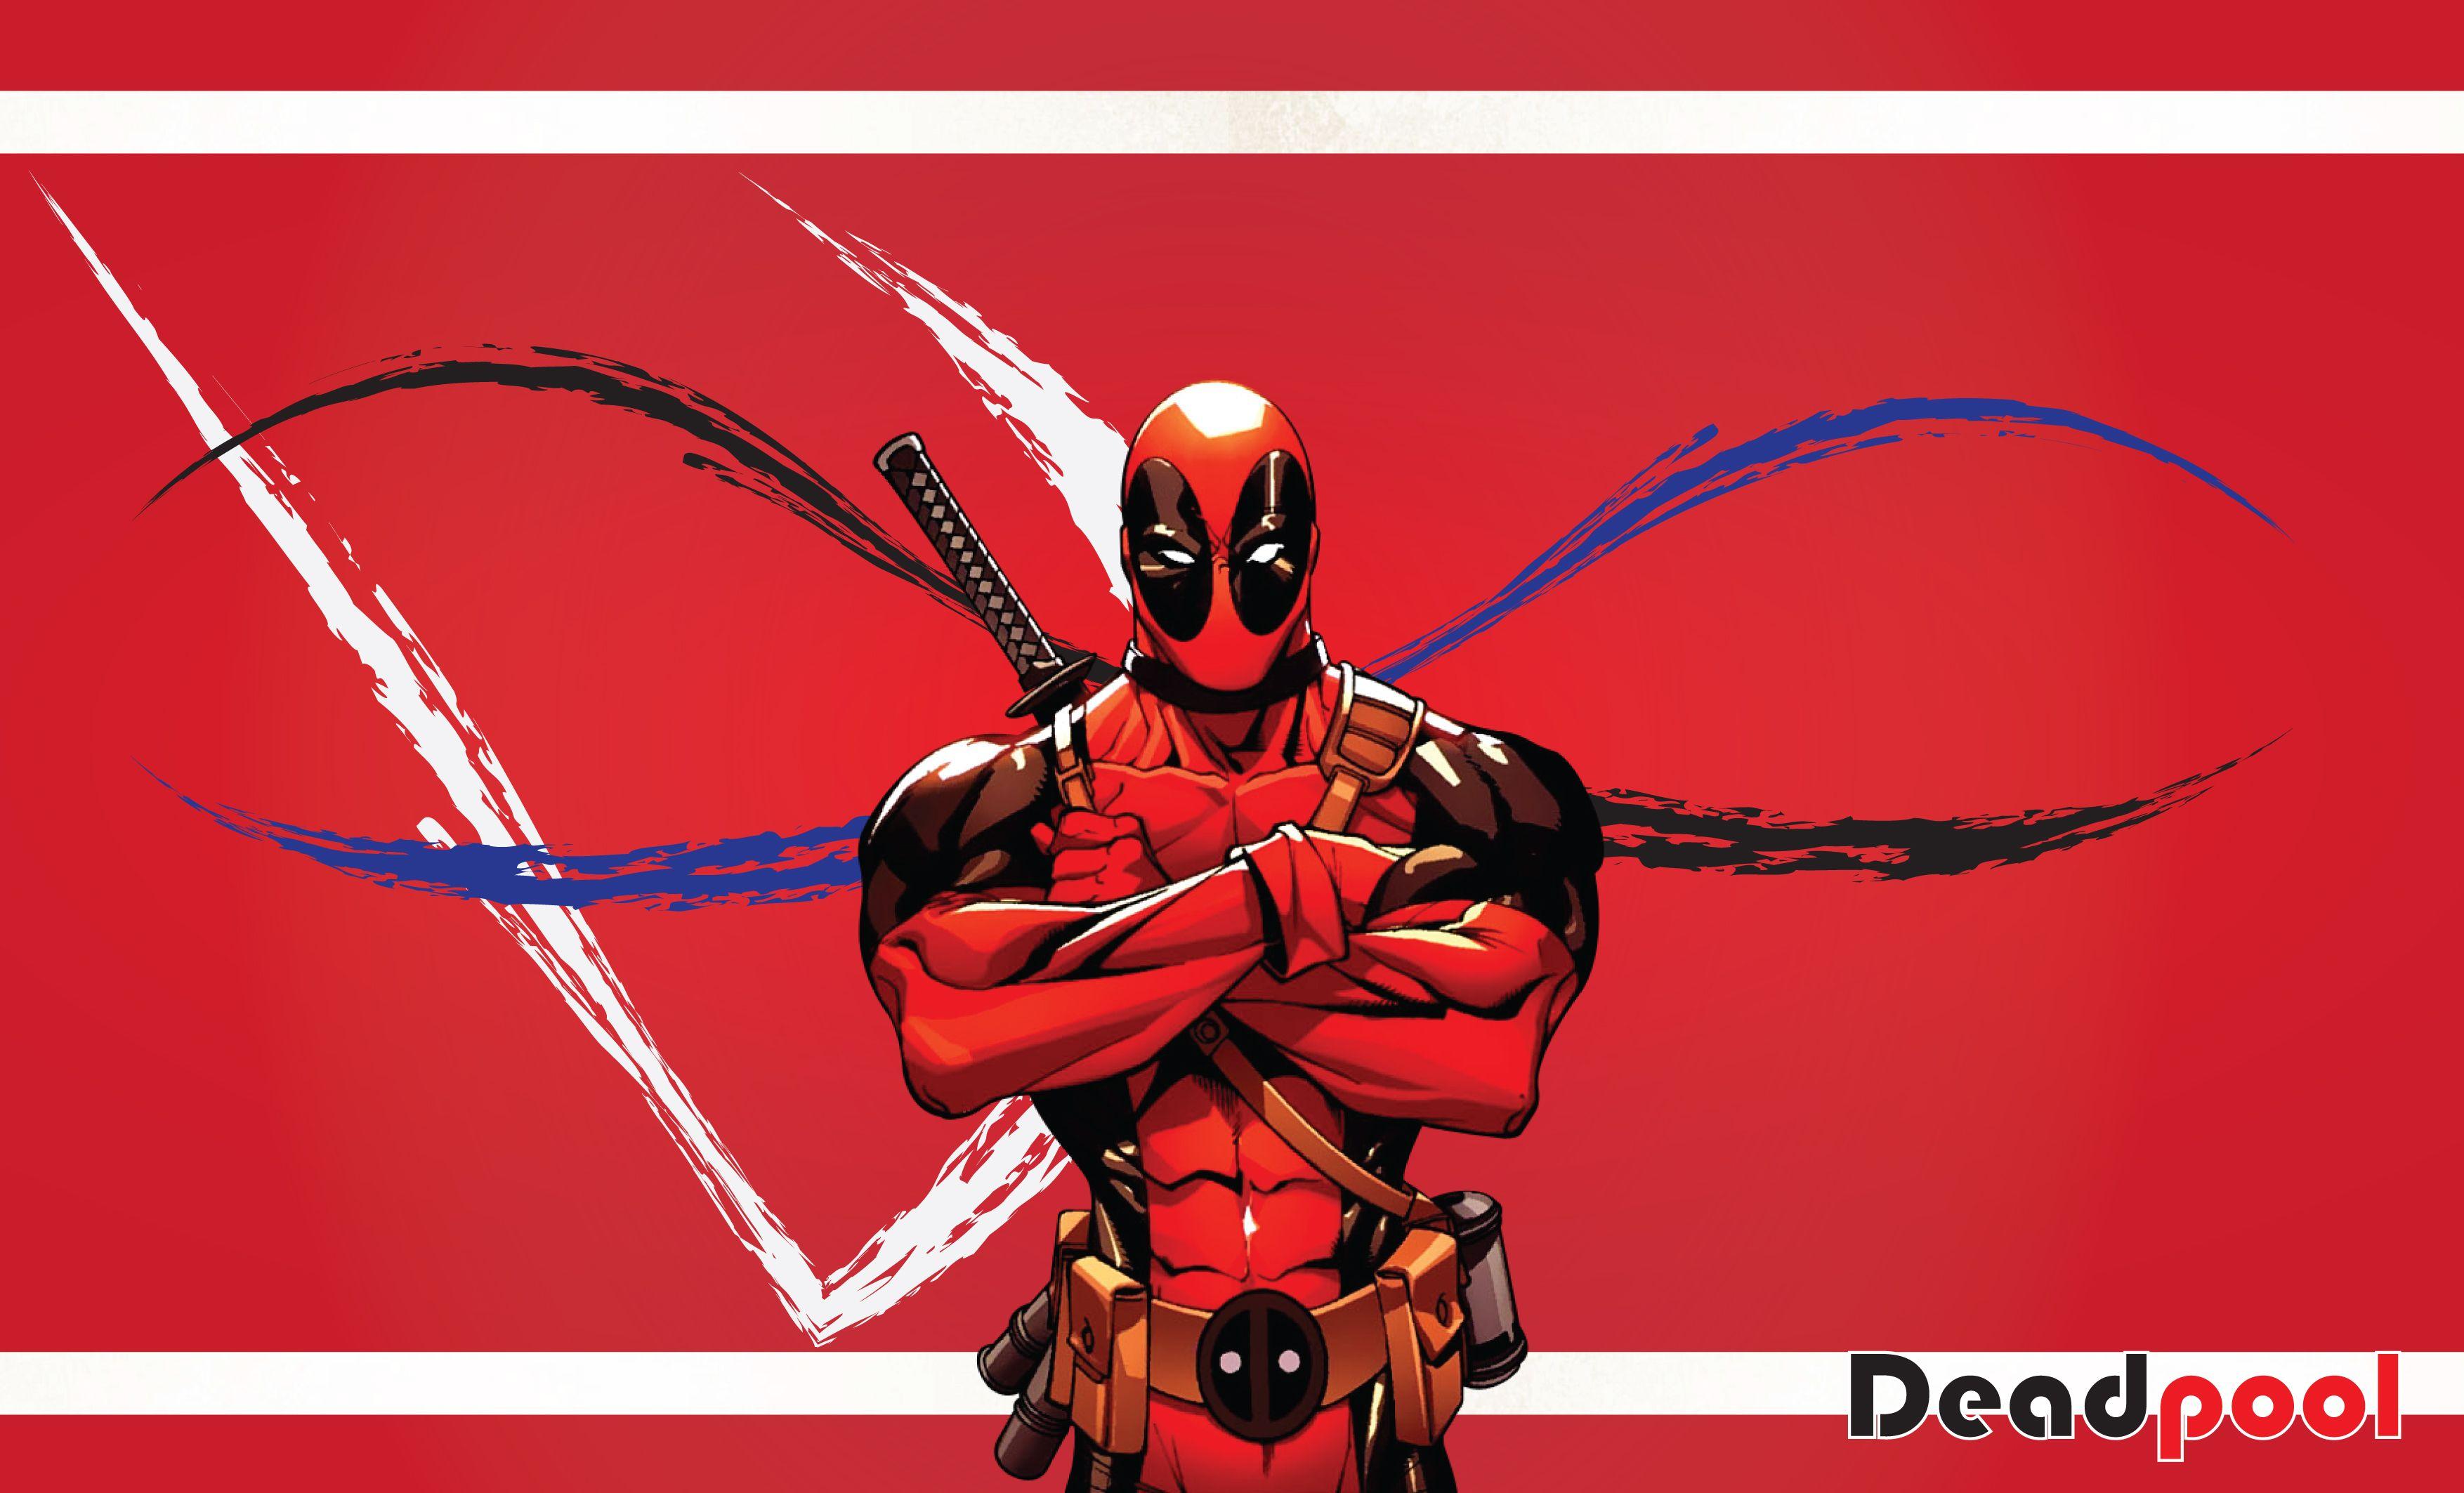 Cool Wallpaper with Deadpool Cartoon Character (27 Pics). HD